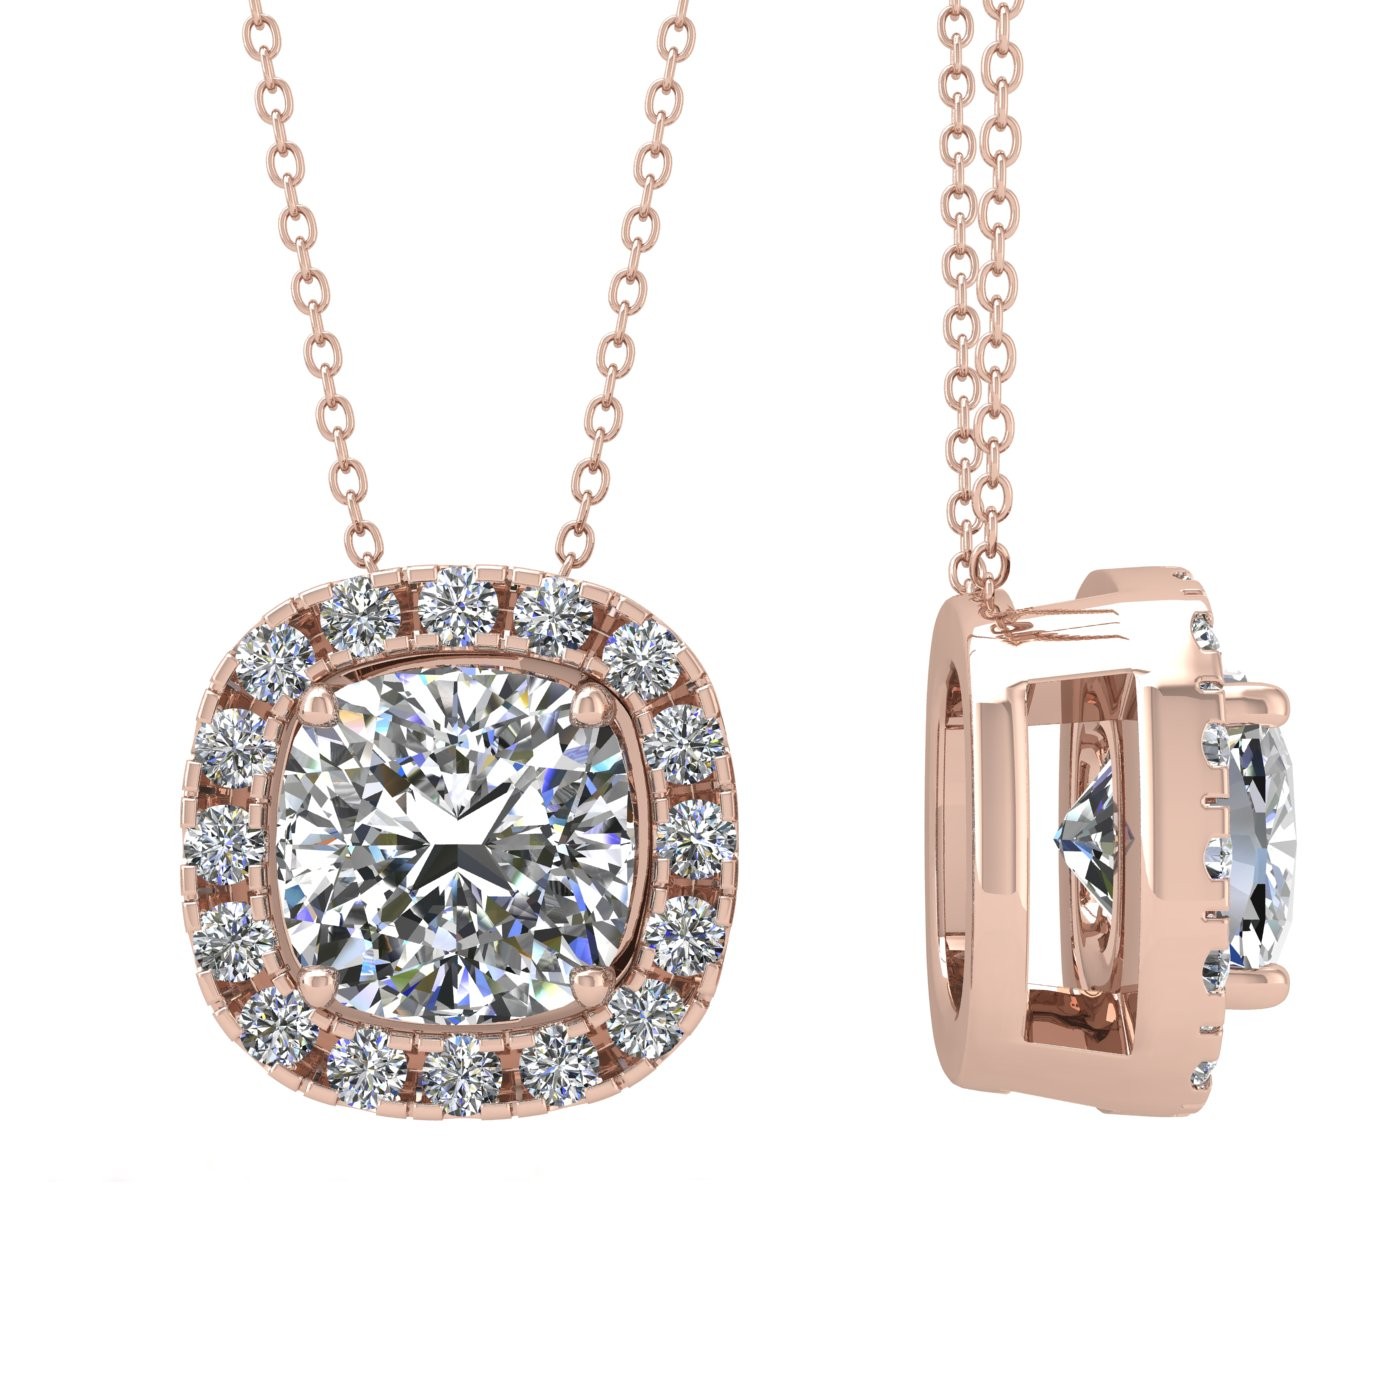 18k rose gold  1 ct 4 prongs cushion shape diamond pendant with diamond pavÉ set halo Photos & images